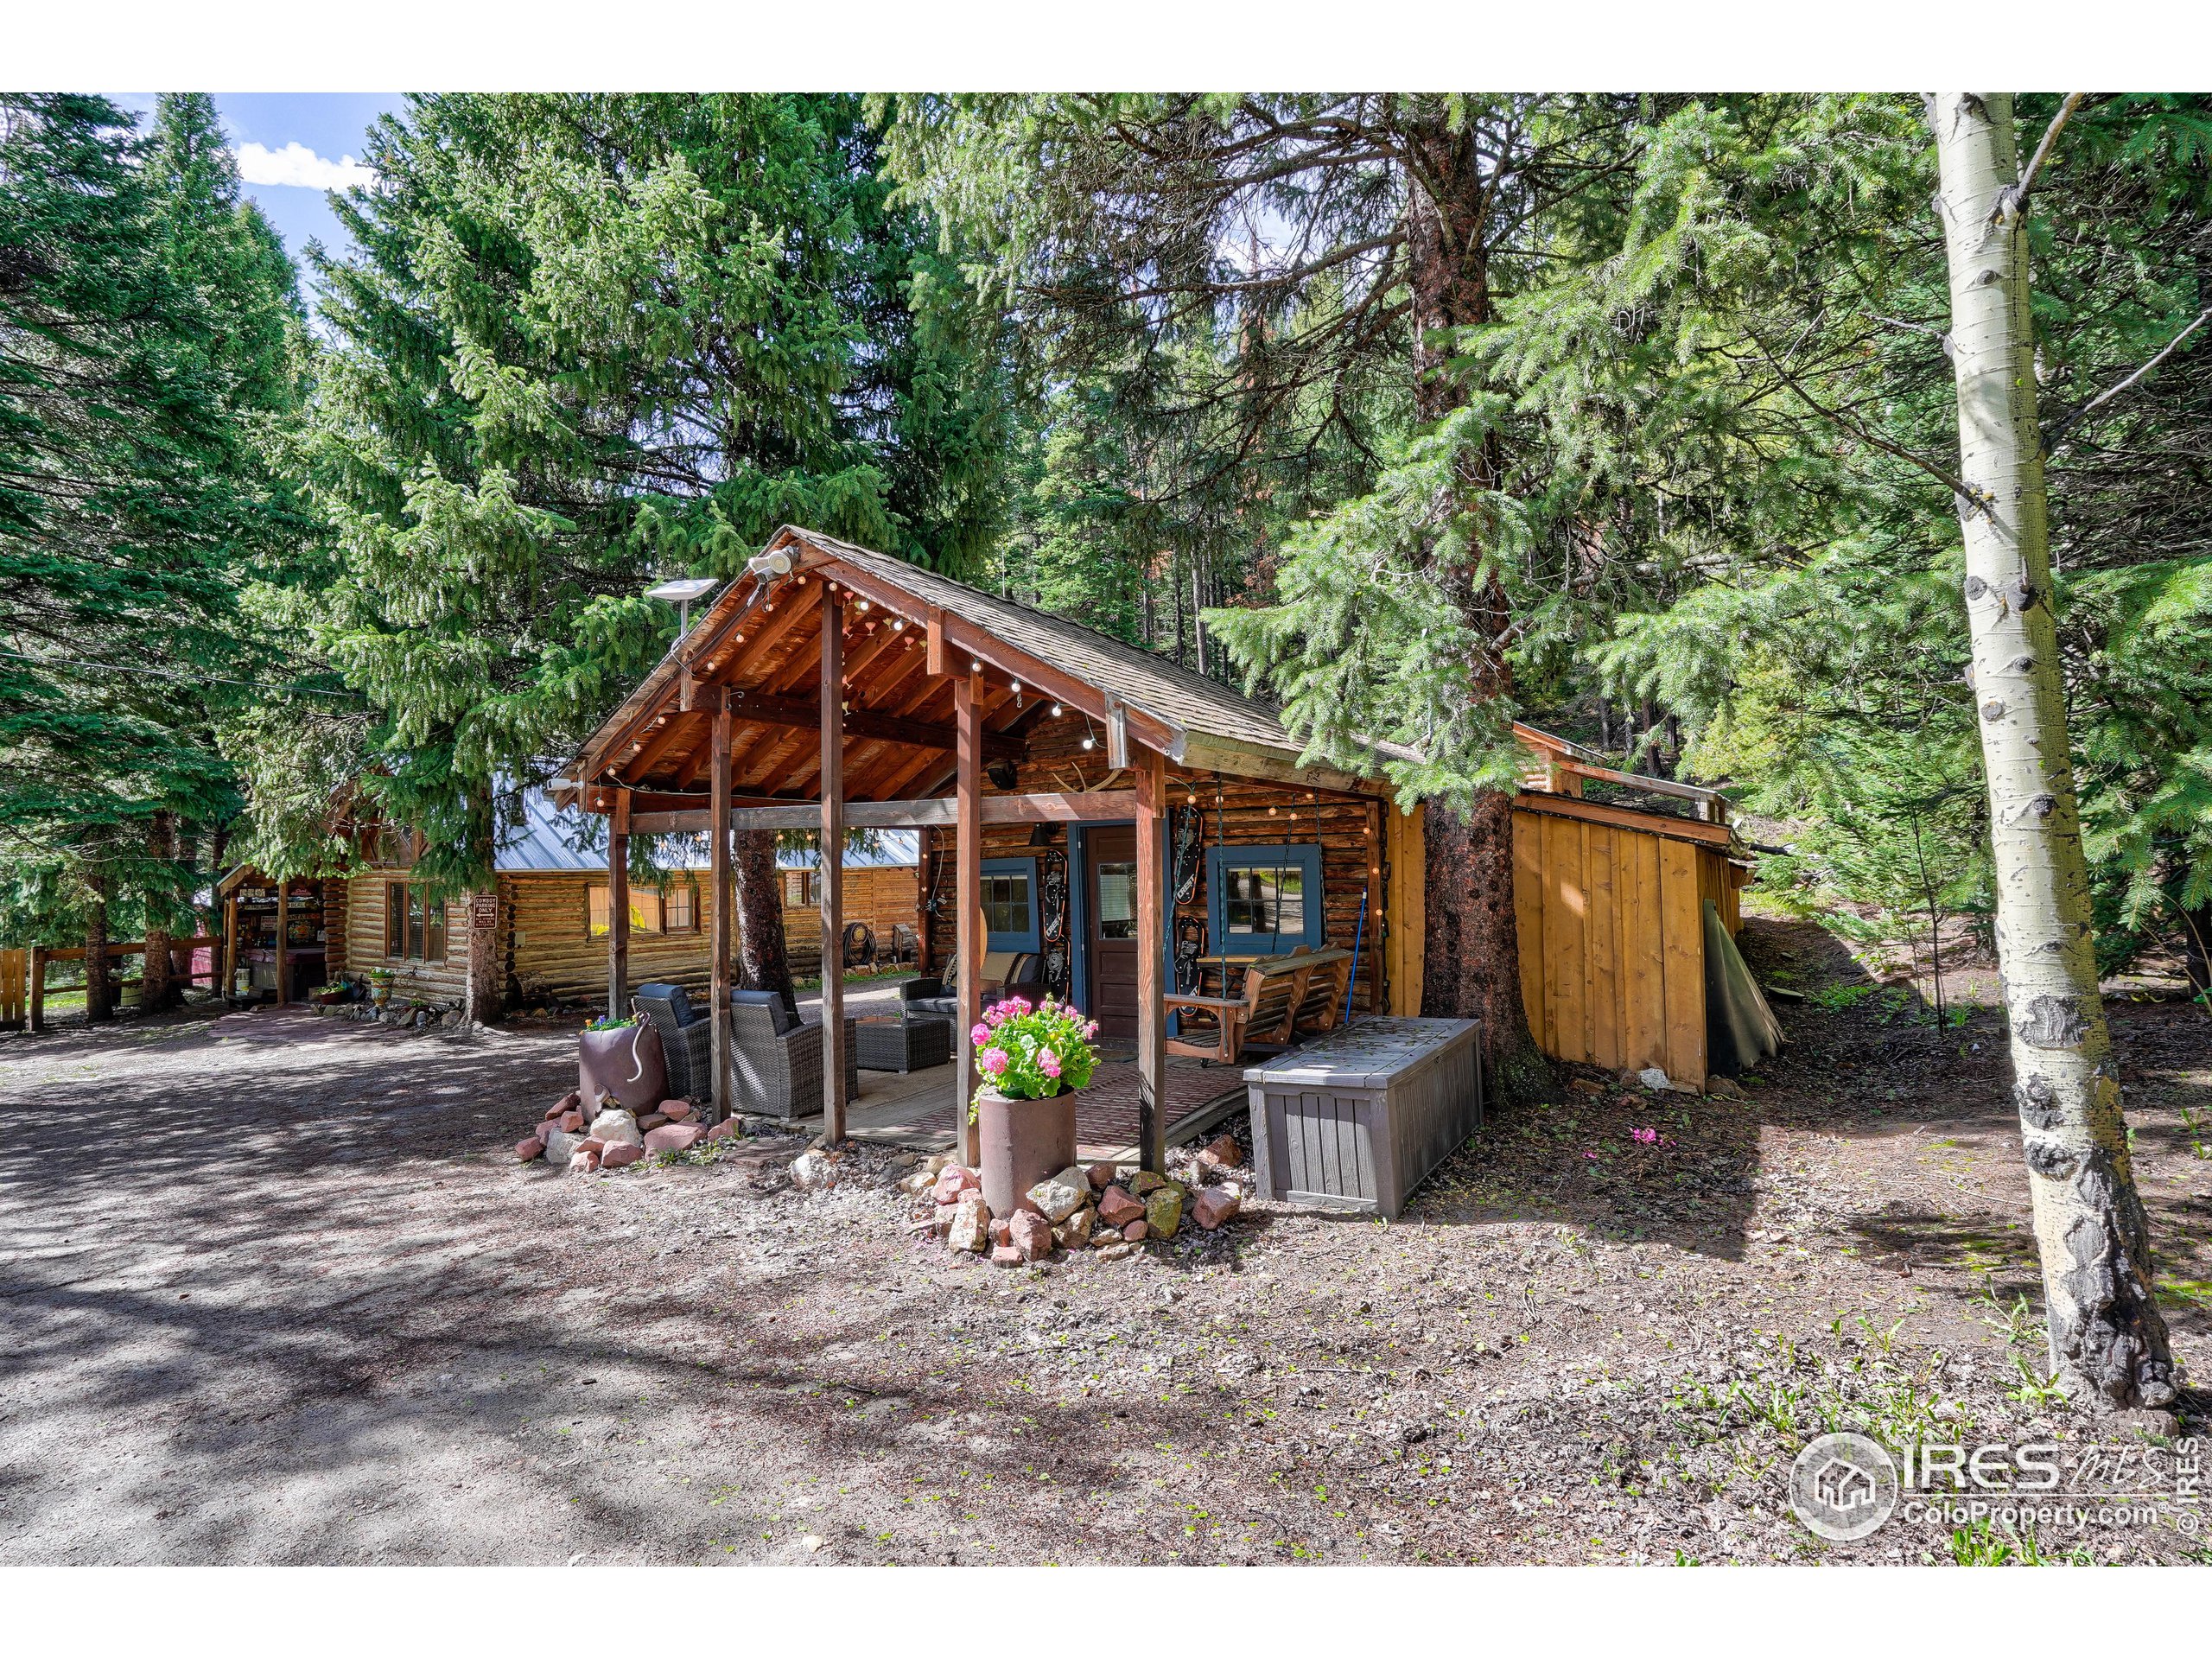 Log Cabin Interior Ideas - Caribou Creek Log Homes